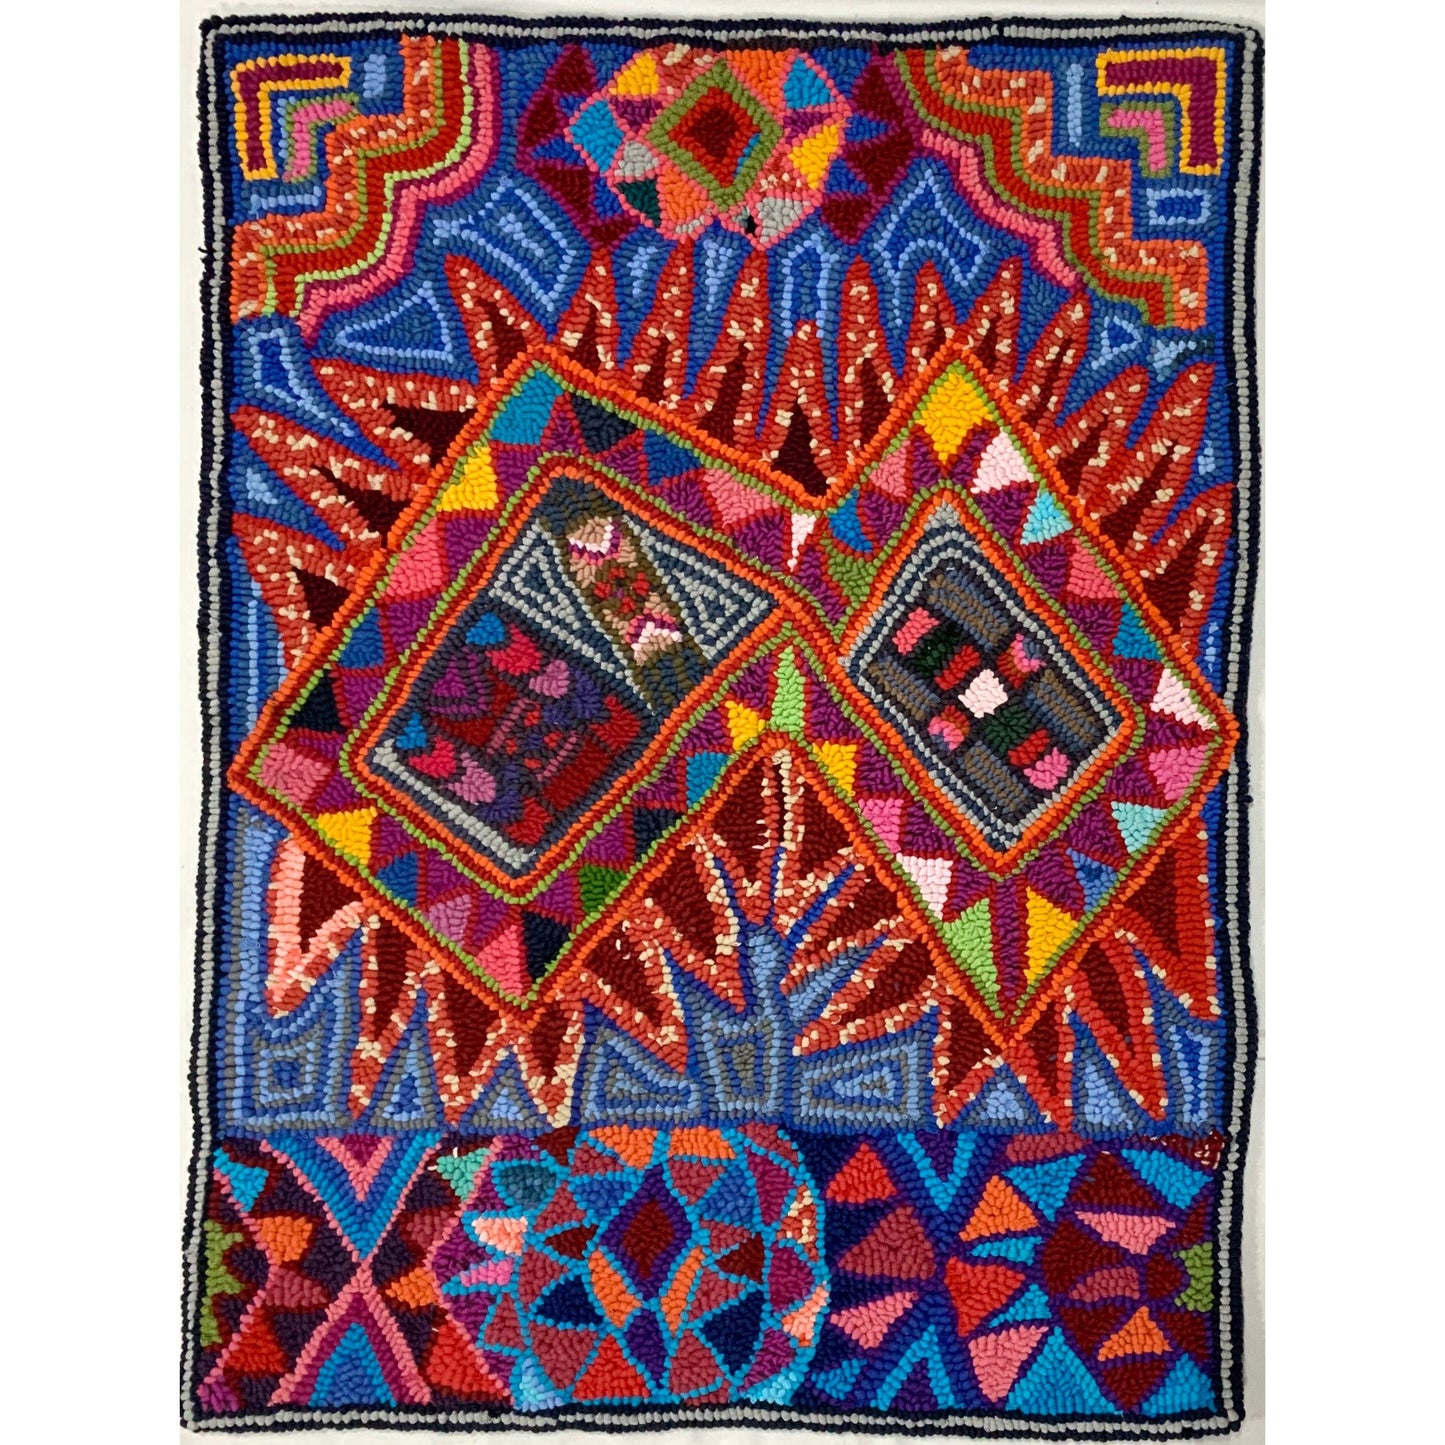 Guatemala, Multicolores, “Heritage” Rug